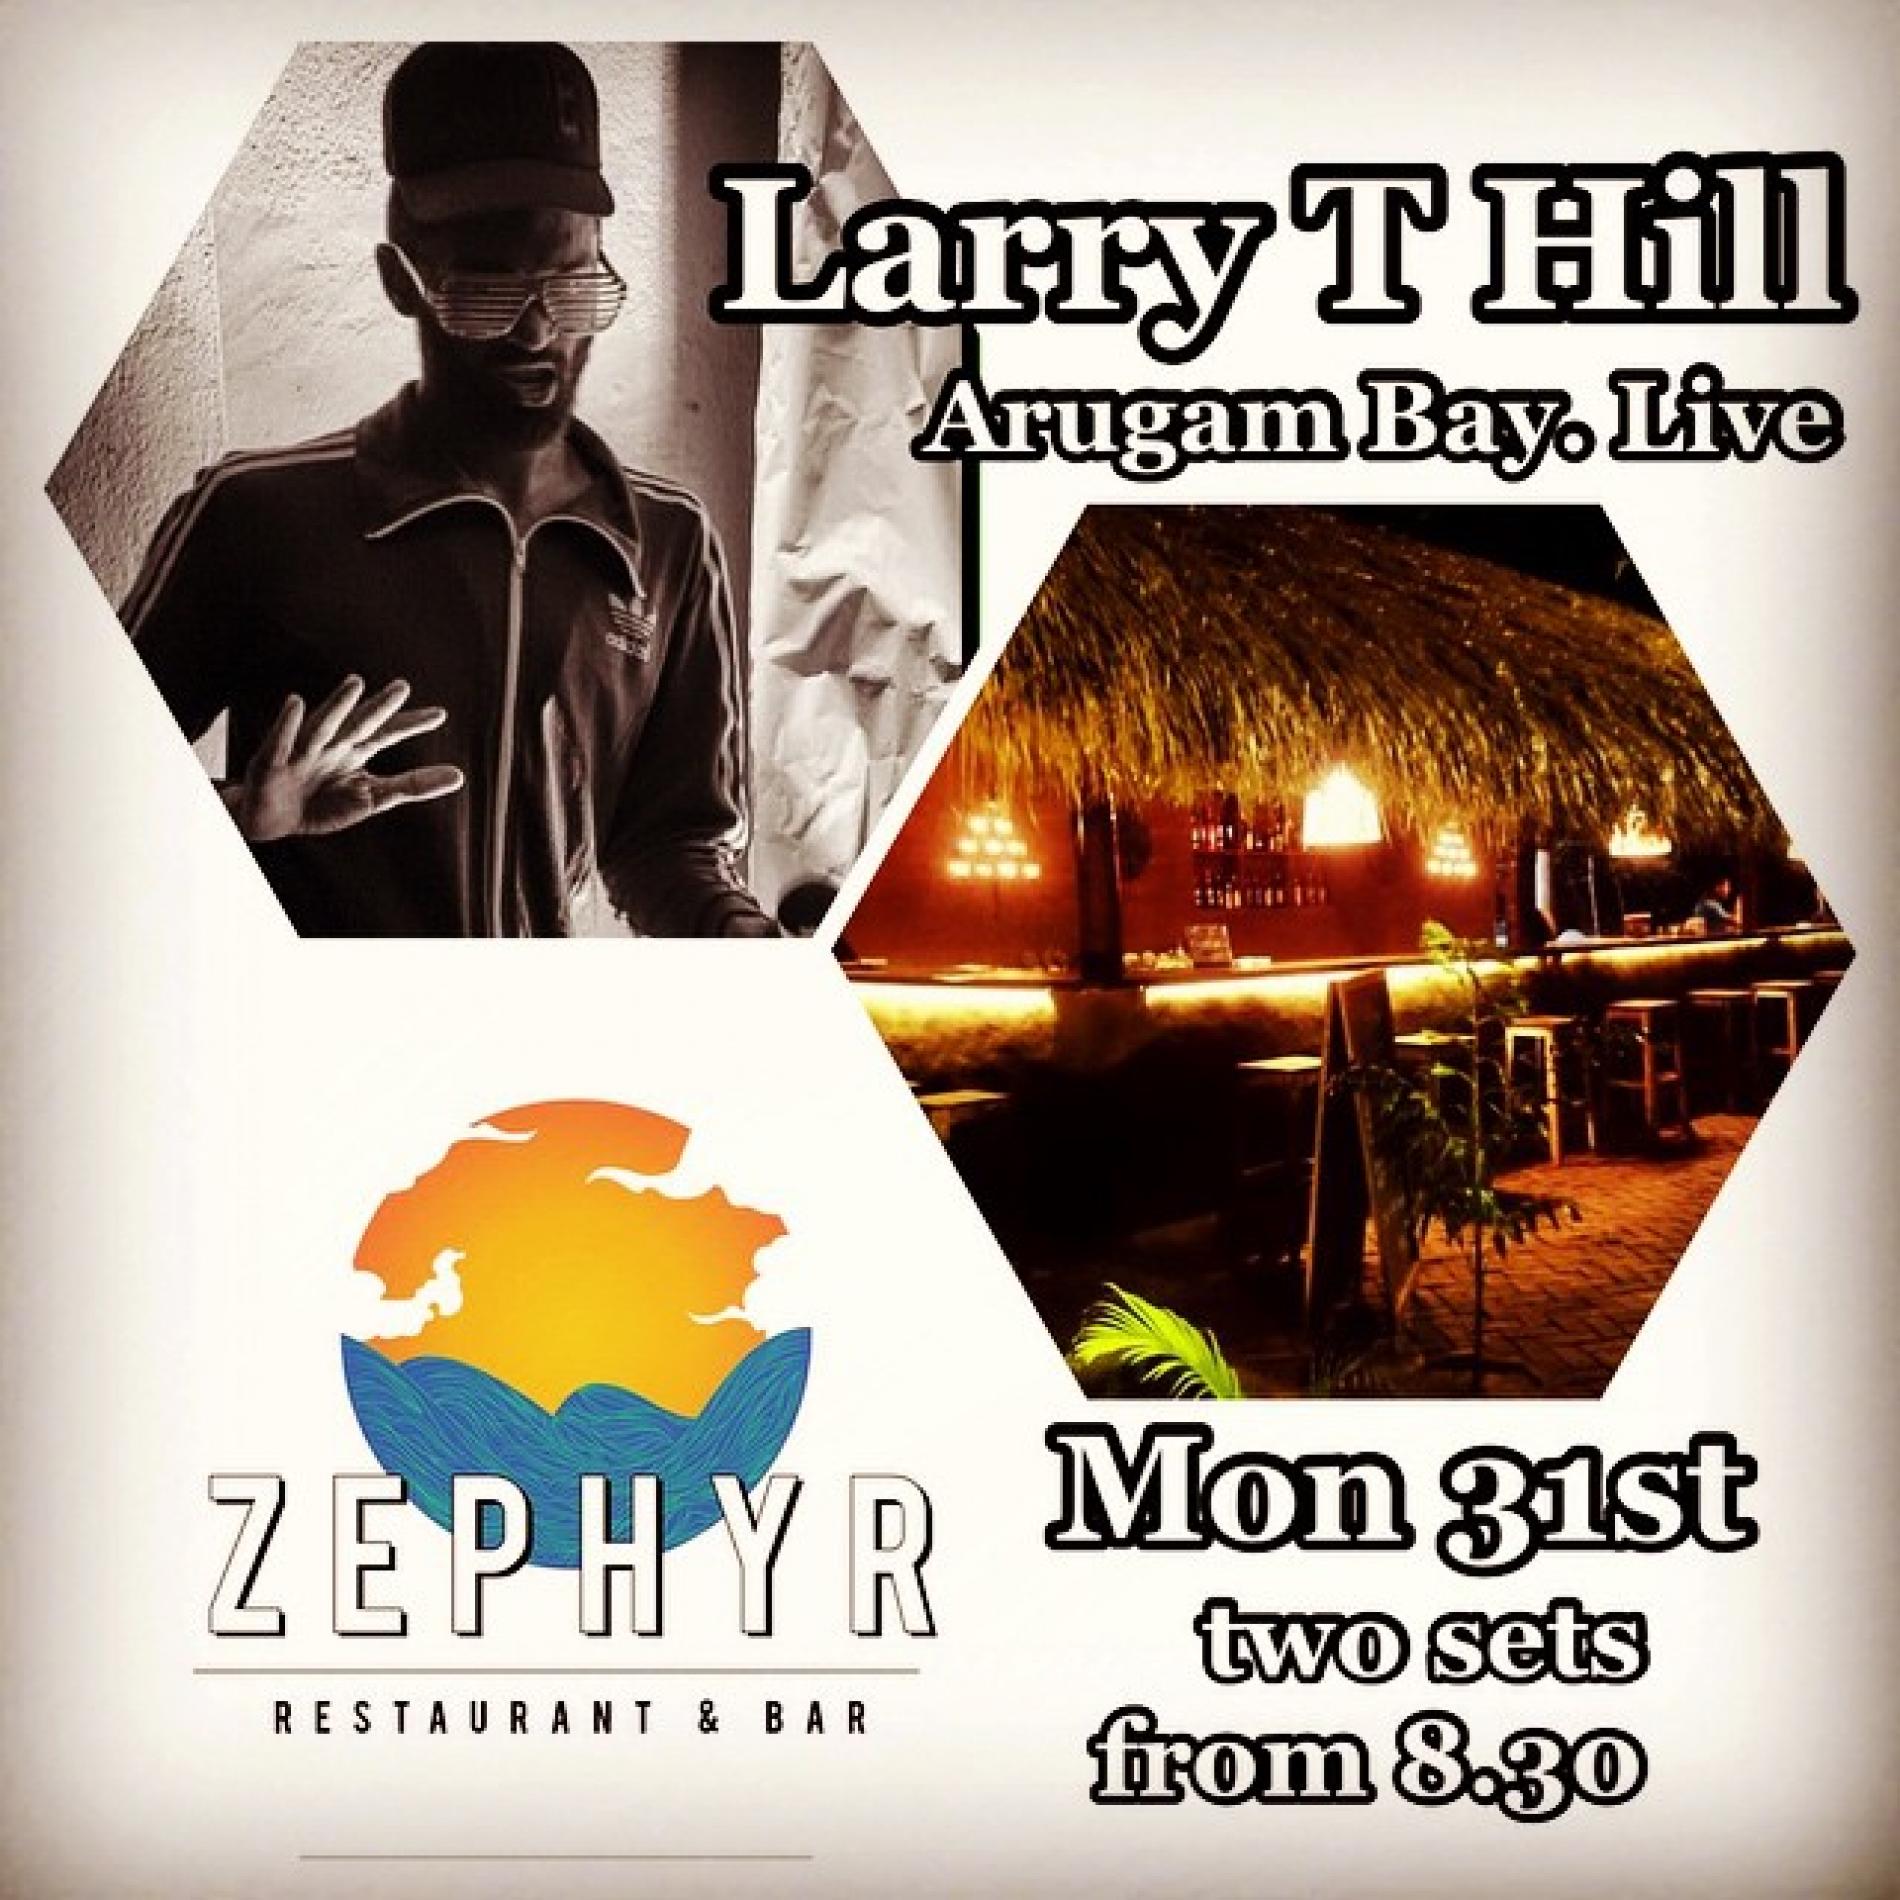 Larry T Hill Is In Arugam Bay Tonight, Go Tell A Friend